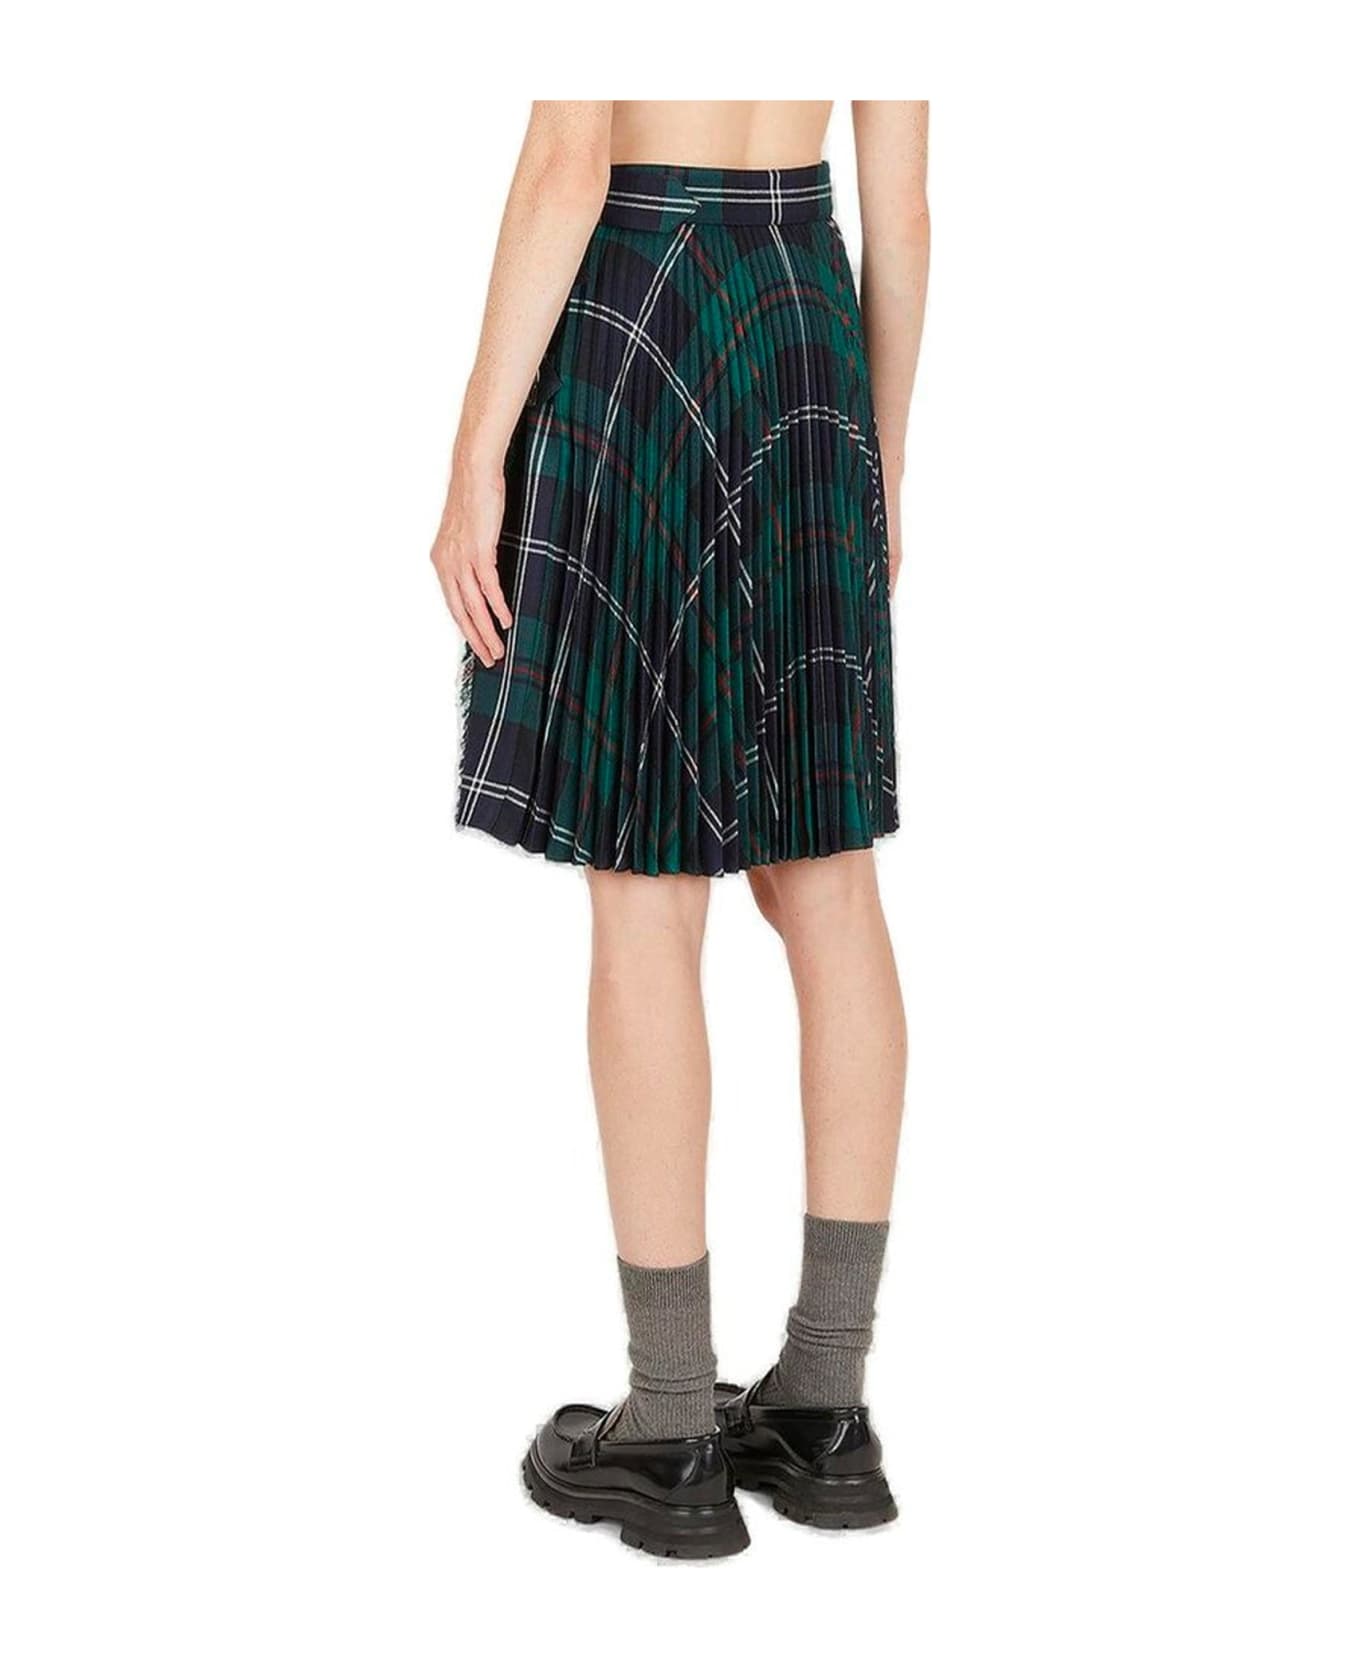 Burberry Tartan Kilt Skirt - Green